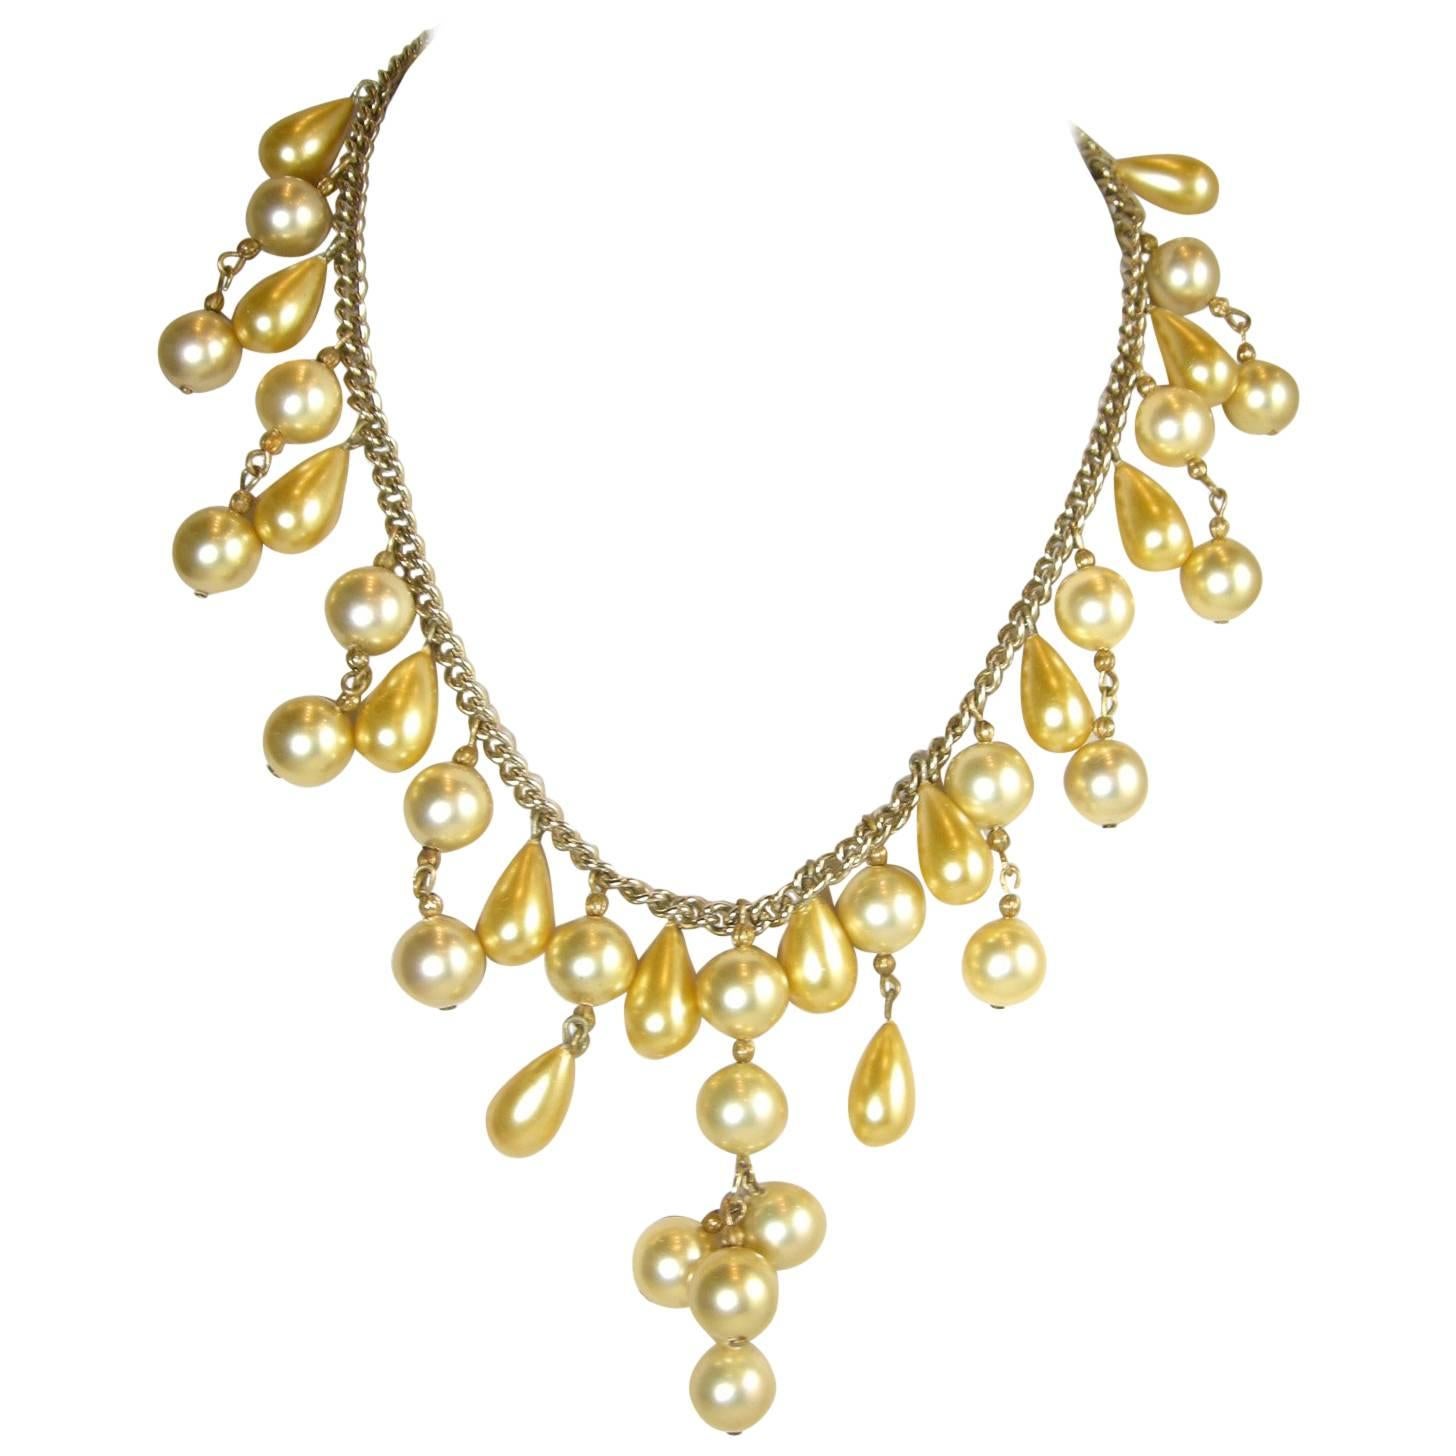 Vintage 1930s Faux Golden Pearl Bib Necklace For Sale